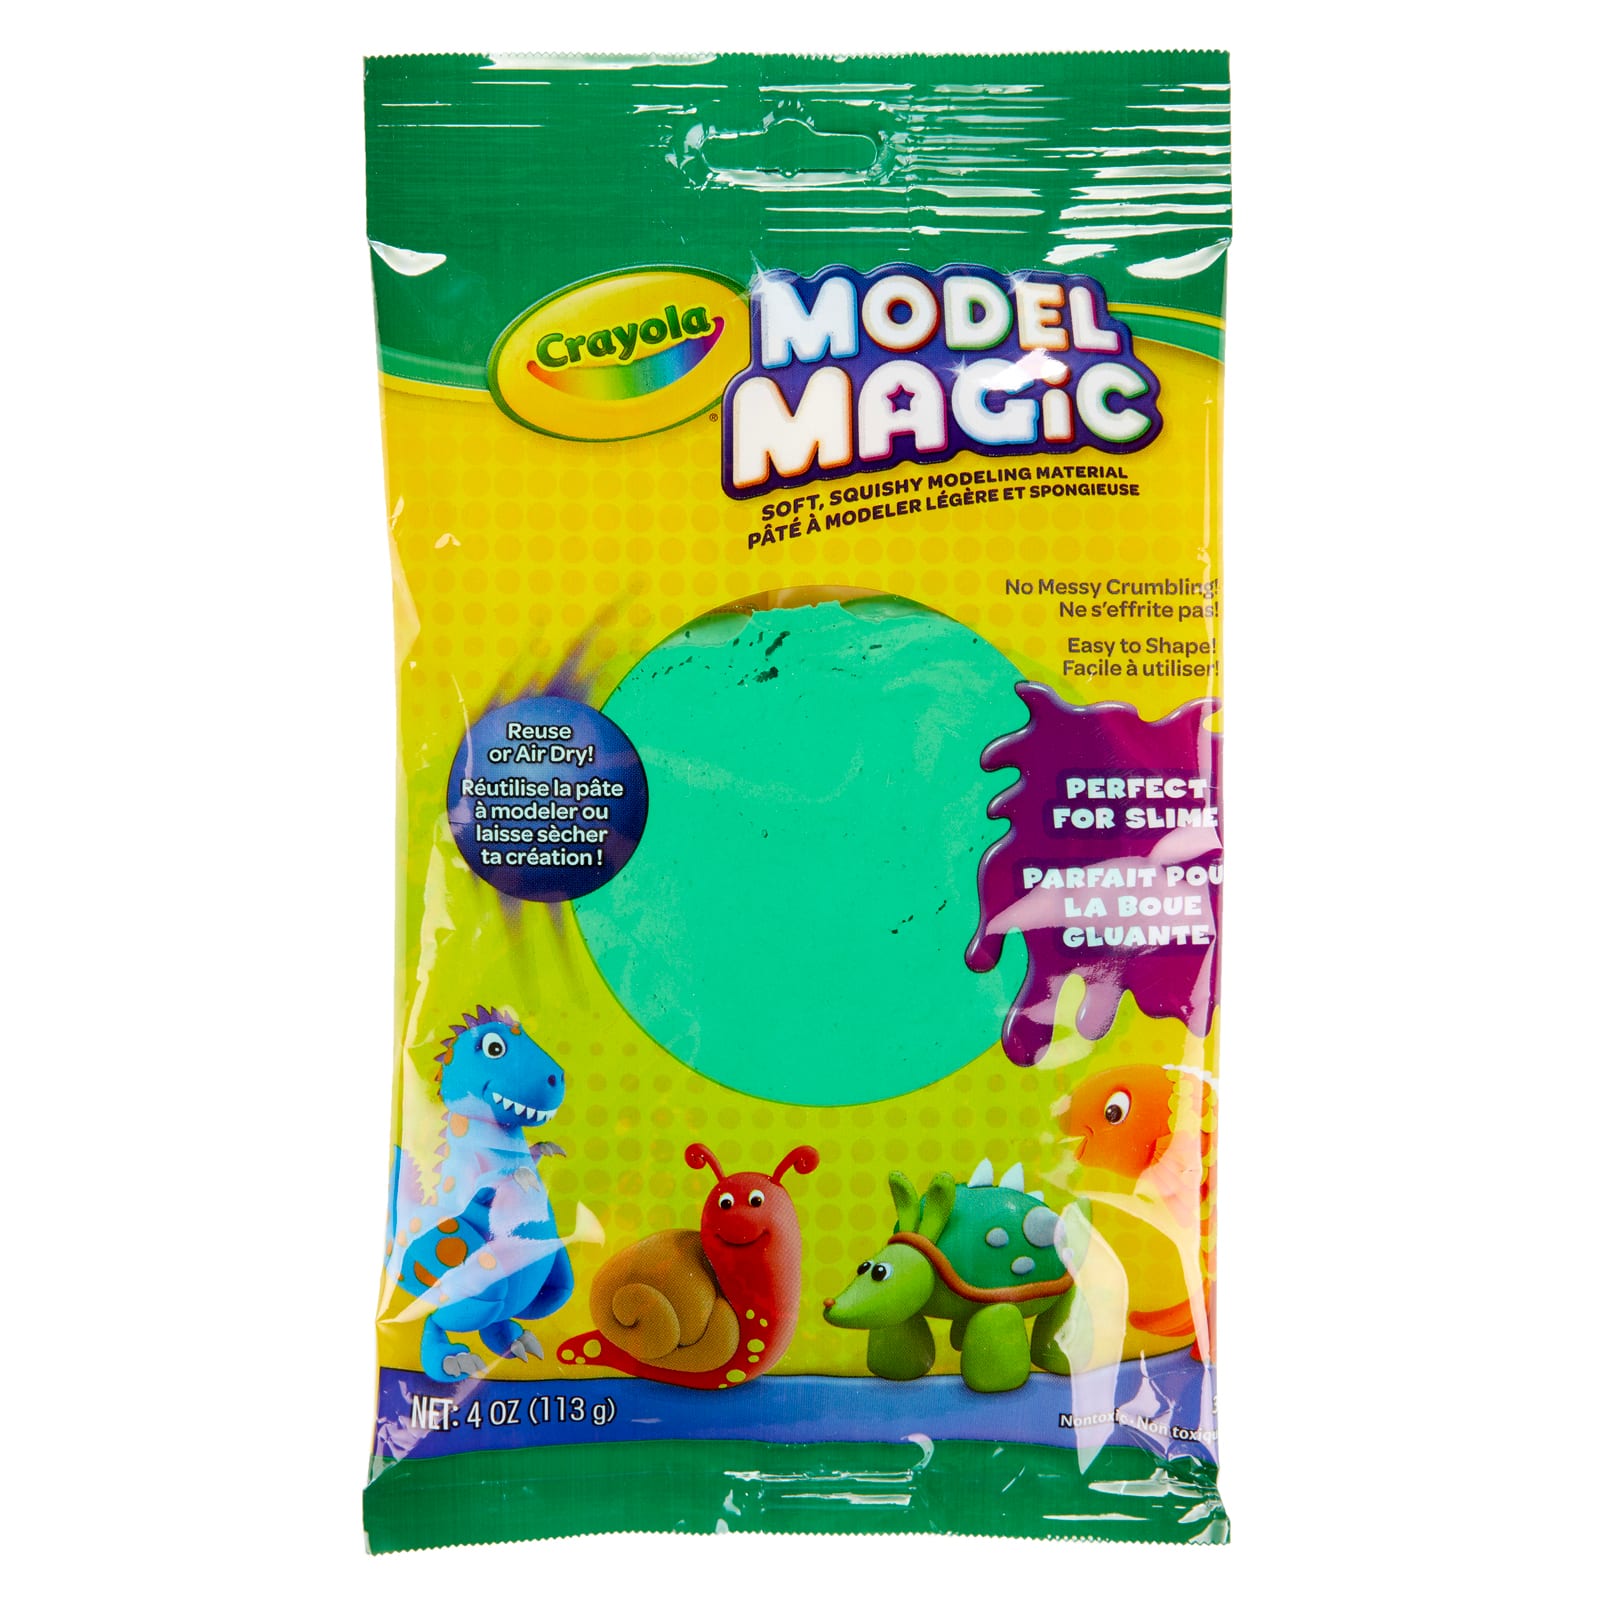 4 Packs: 6 ct. (24 total) Crayola® Model Magic® 4oz. Green Modeling